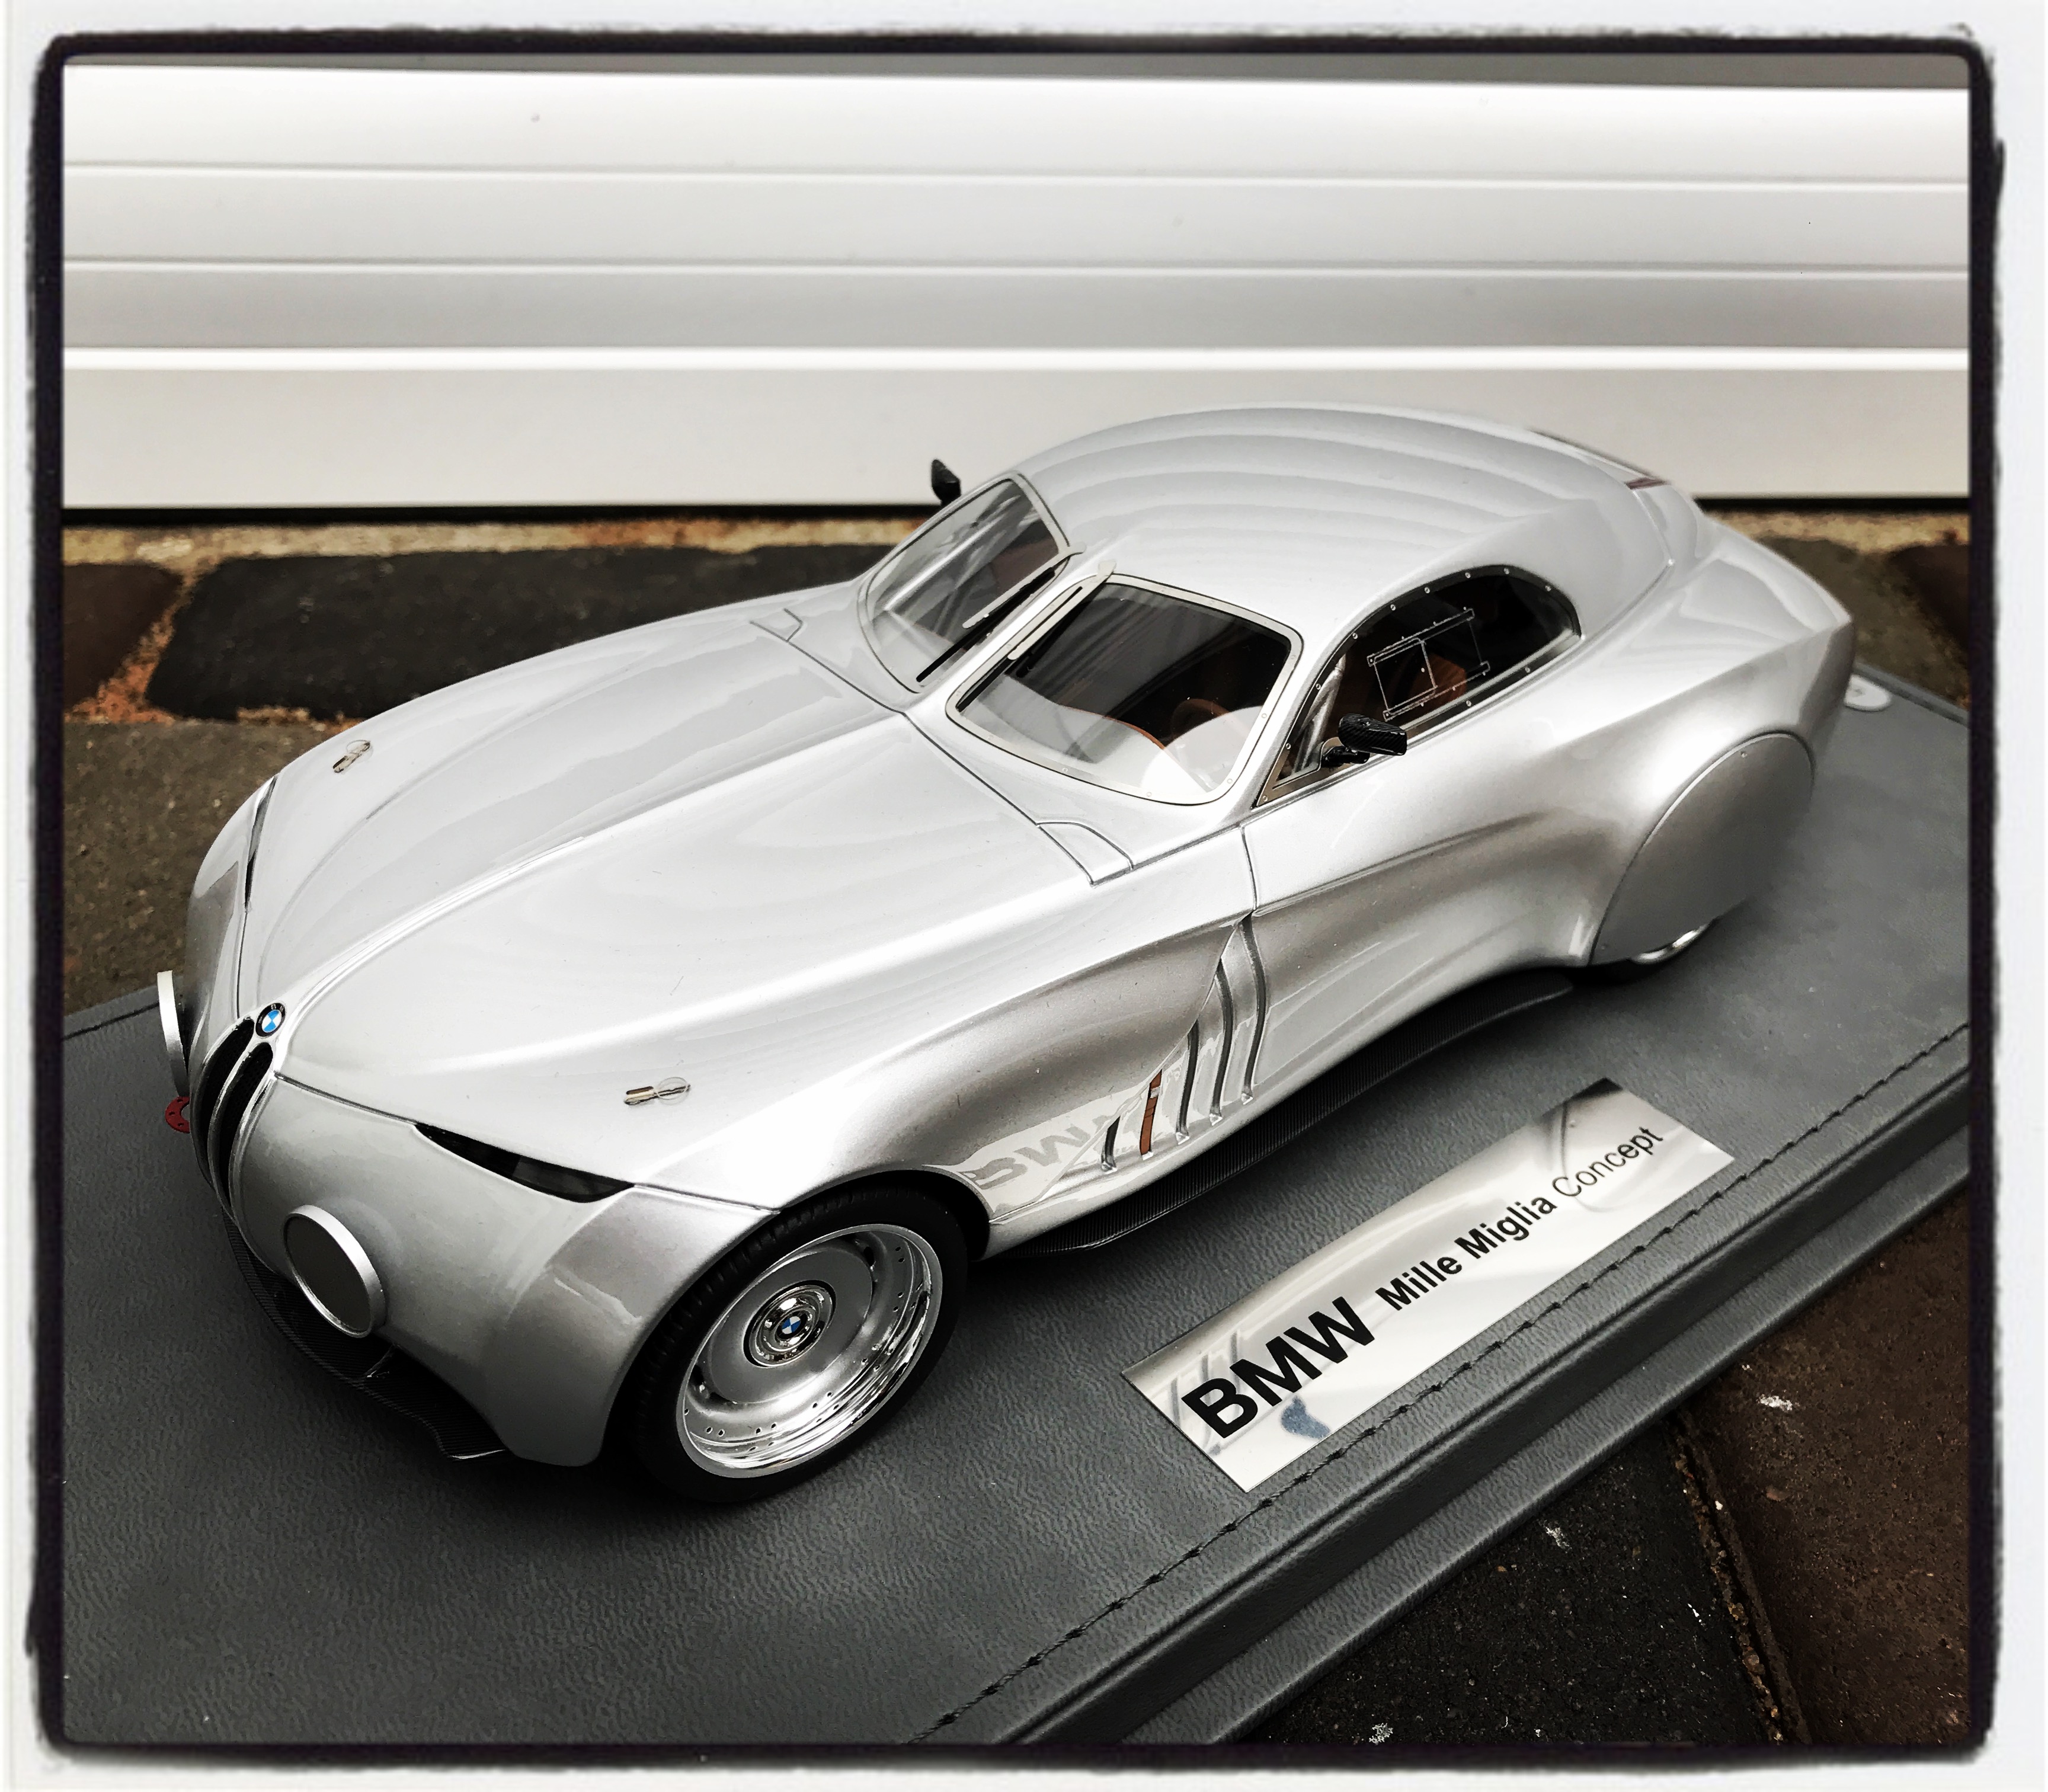 BMW Mille Miglia Concept, le 079 of 200pcs. (bbr)